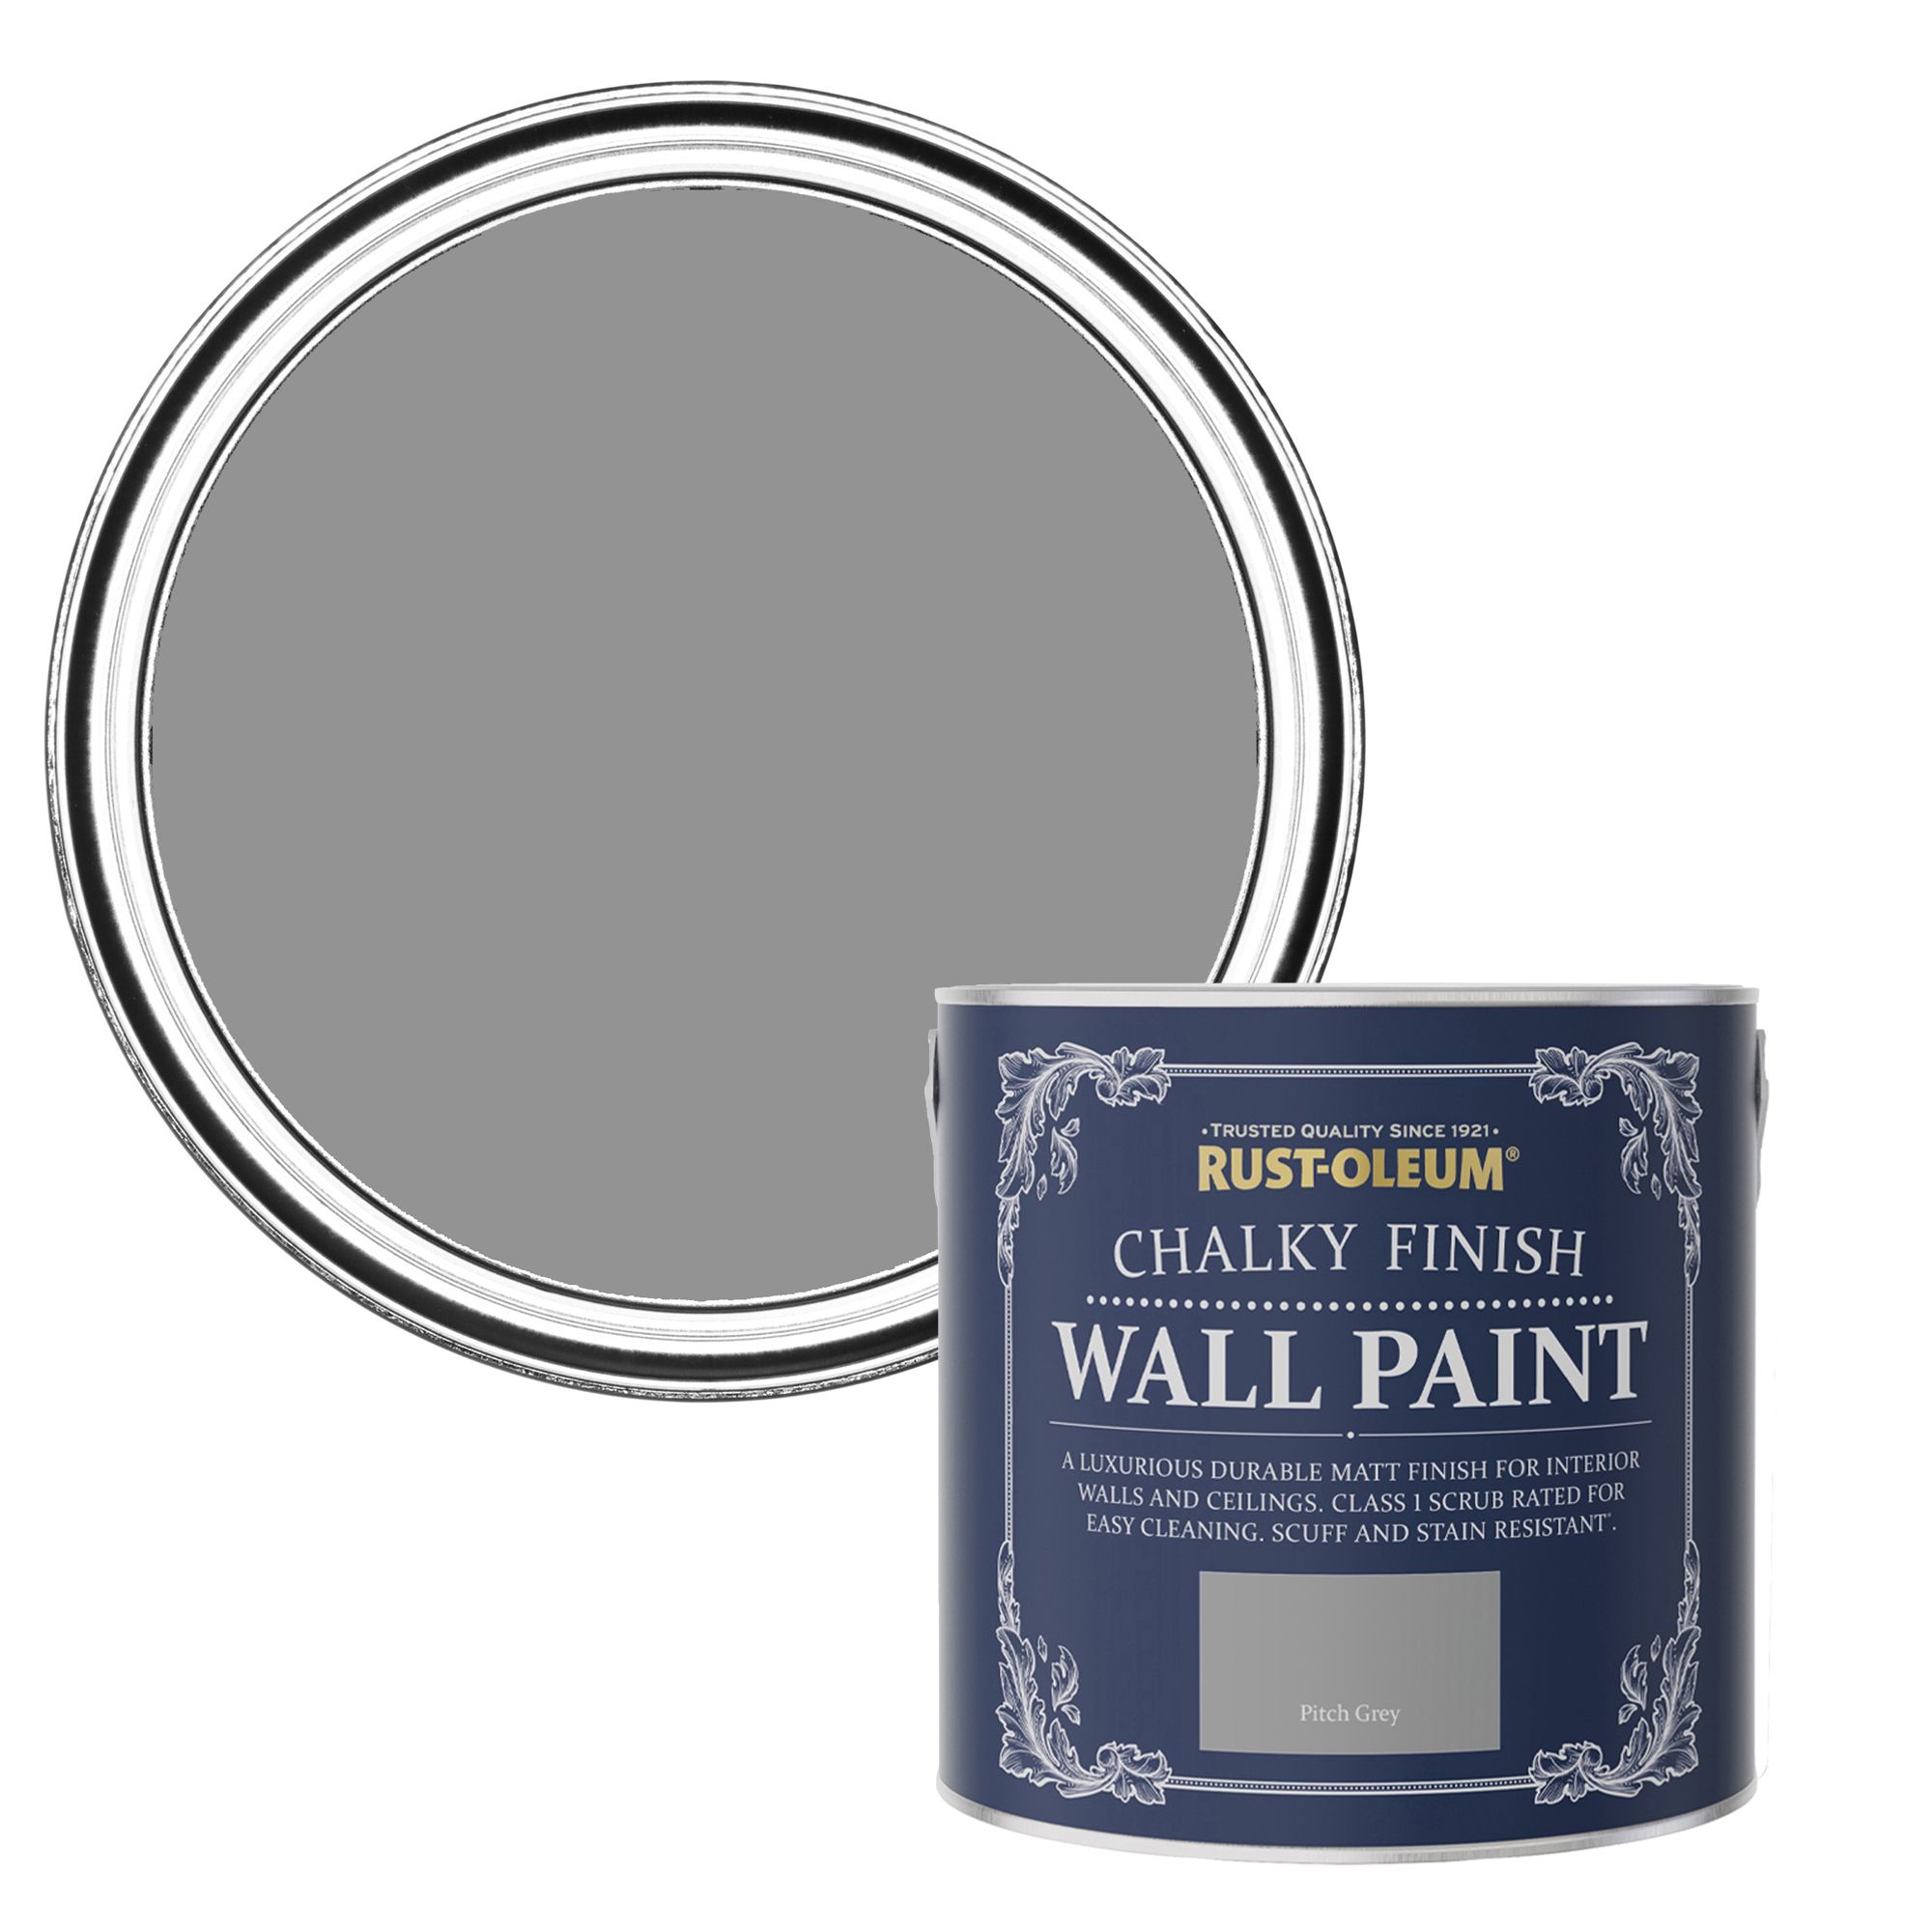 https://media.diy.com/is/image/Kingfisher/rust-oleum-chalky-finish-wall-pitch-grey-flat-matt-emulsion-paint-2-5l~5013296042628_21c_bq?$MOB_PREV$&$width=618&$height=618